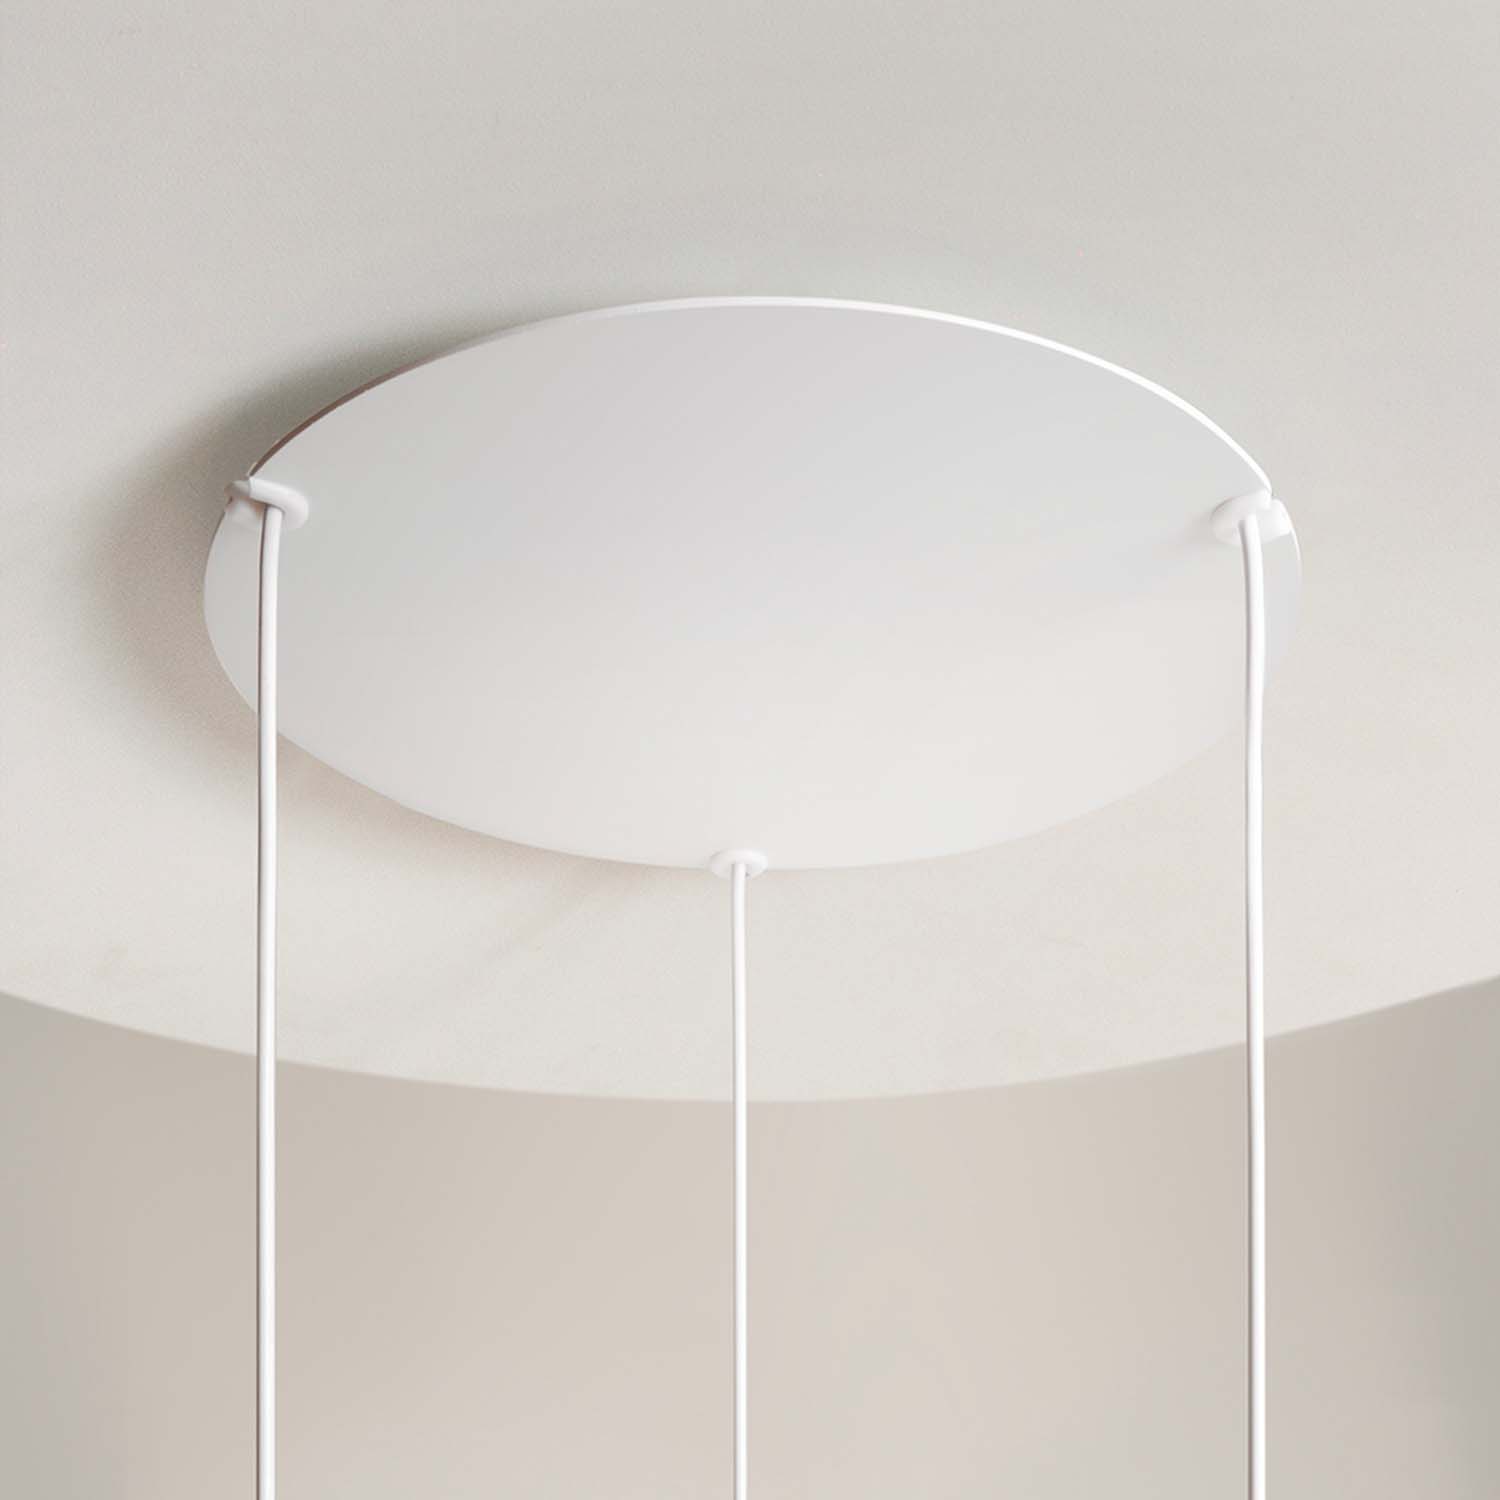 REFLEX - Design white disc space pendant lamp